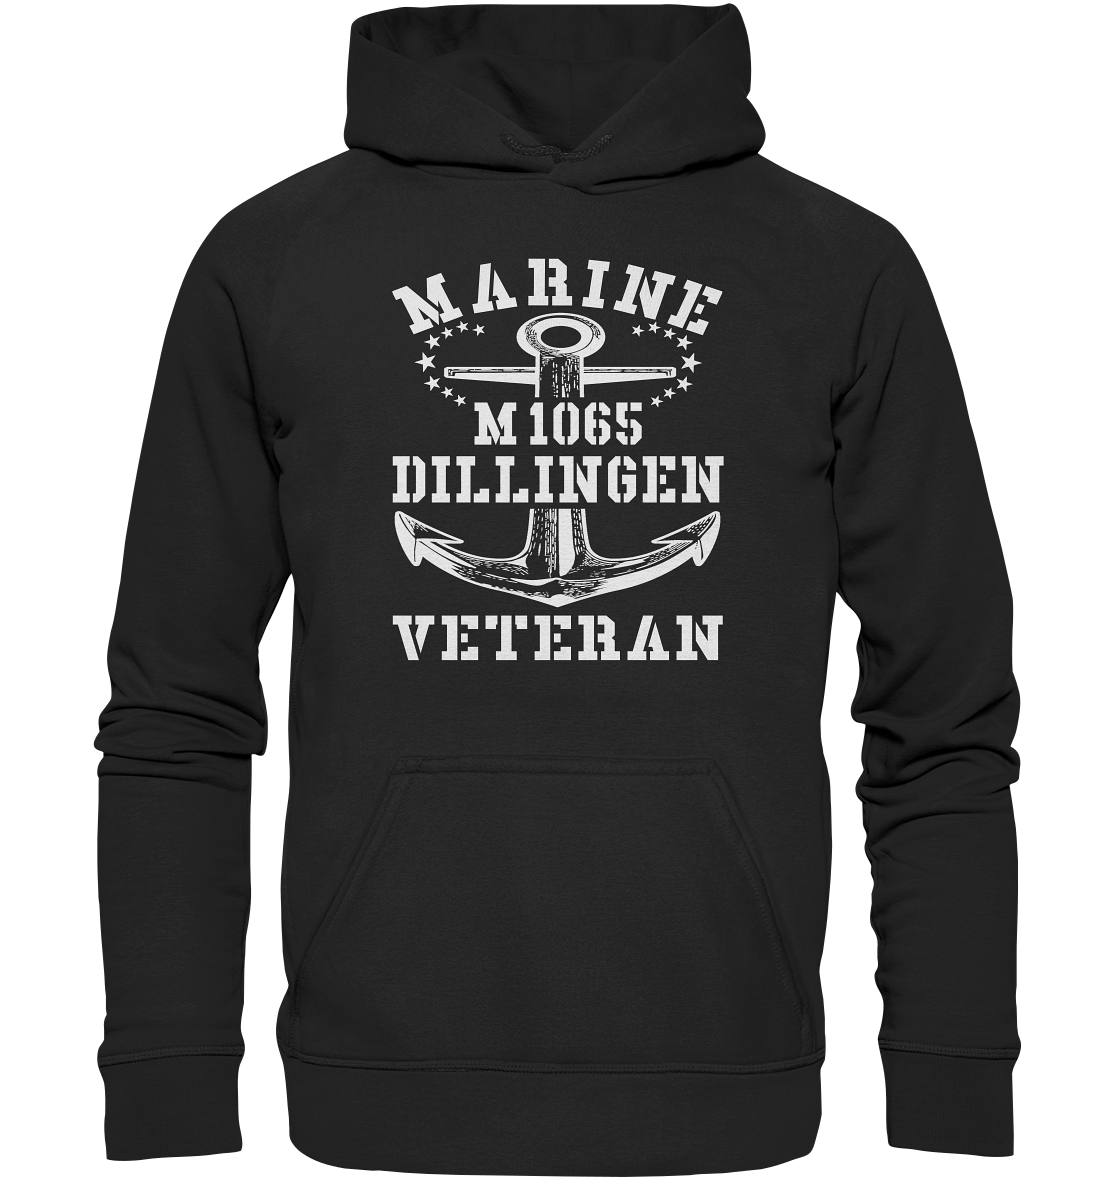 Mij.-Boot M1065 DILLINGEN Marine Veteran  - Basic Unisex Hoodie